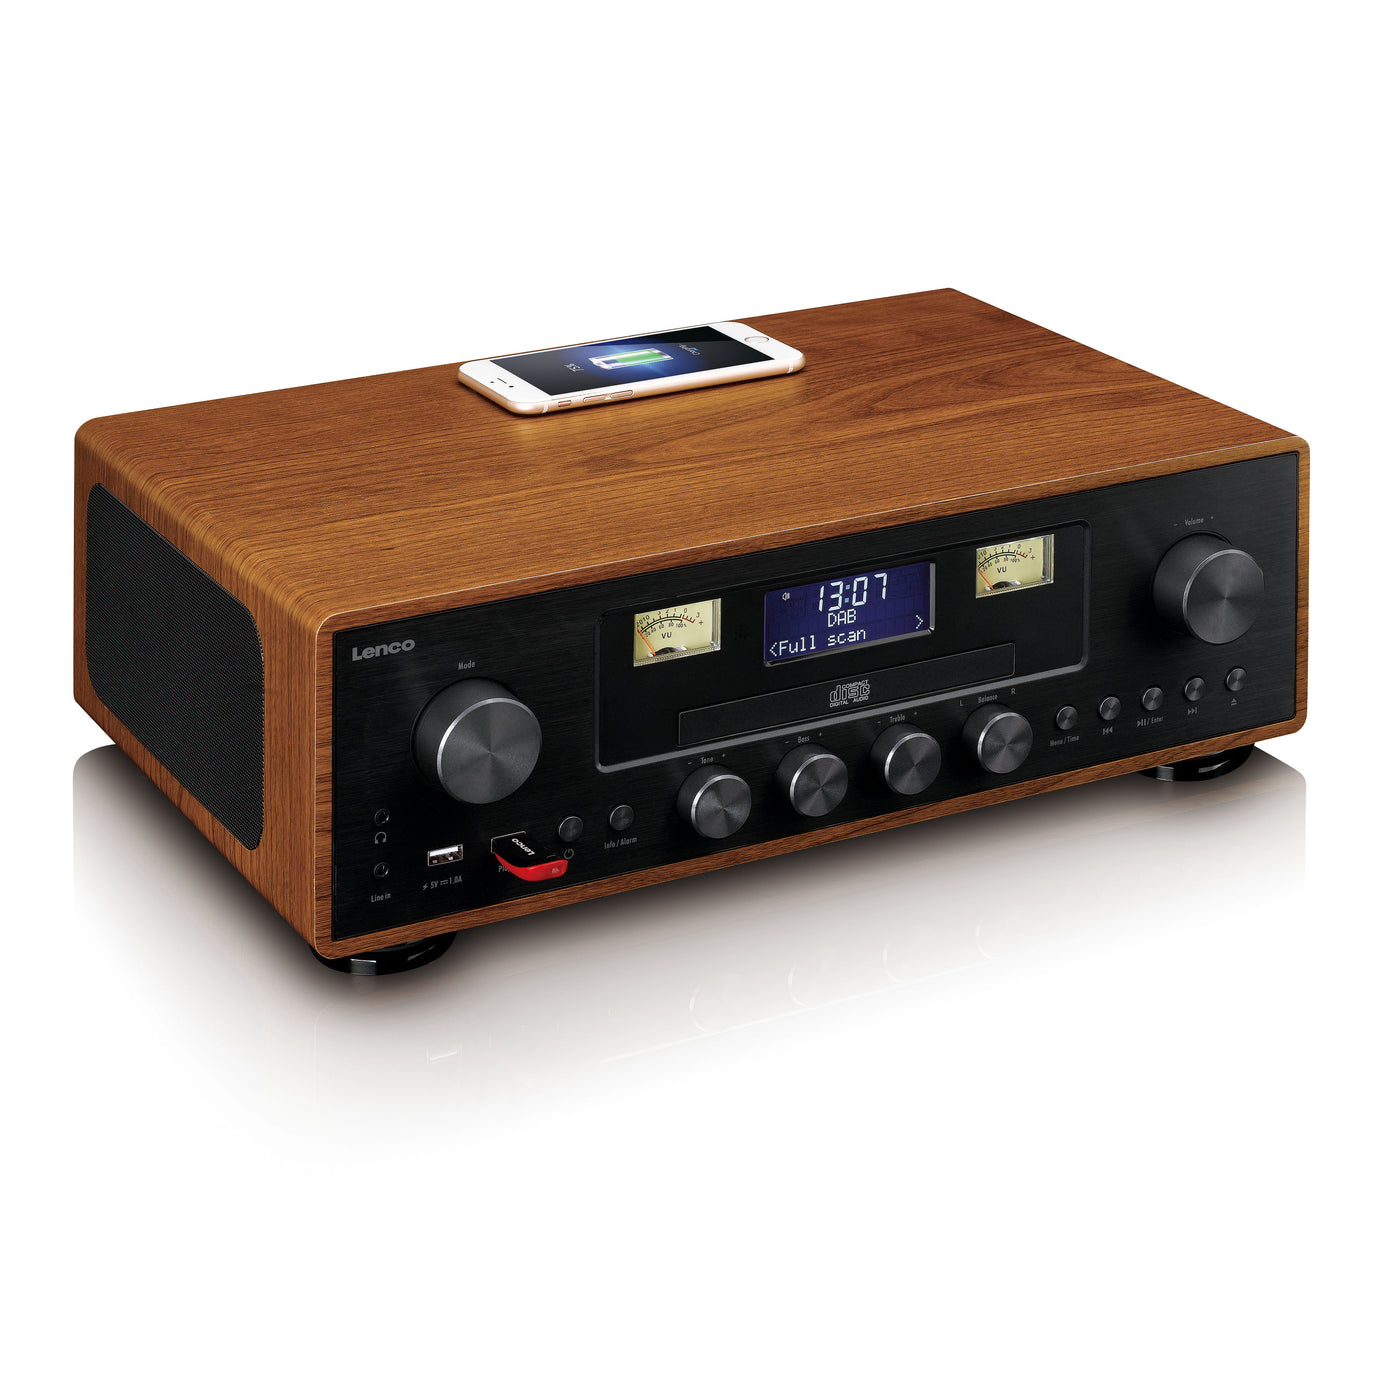 LENCO DAR-081WD - DAB+/FM radio with CD player, USB, Bluetooth and wireless charging point - Wood/Black